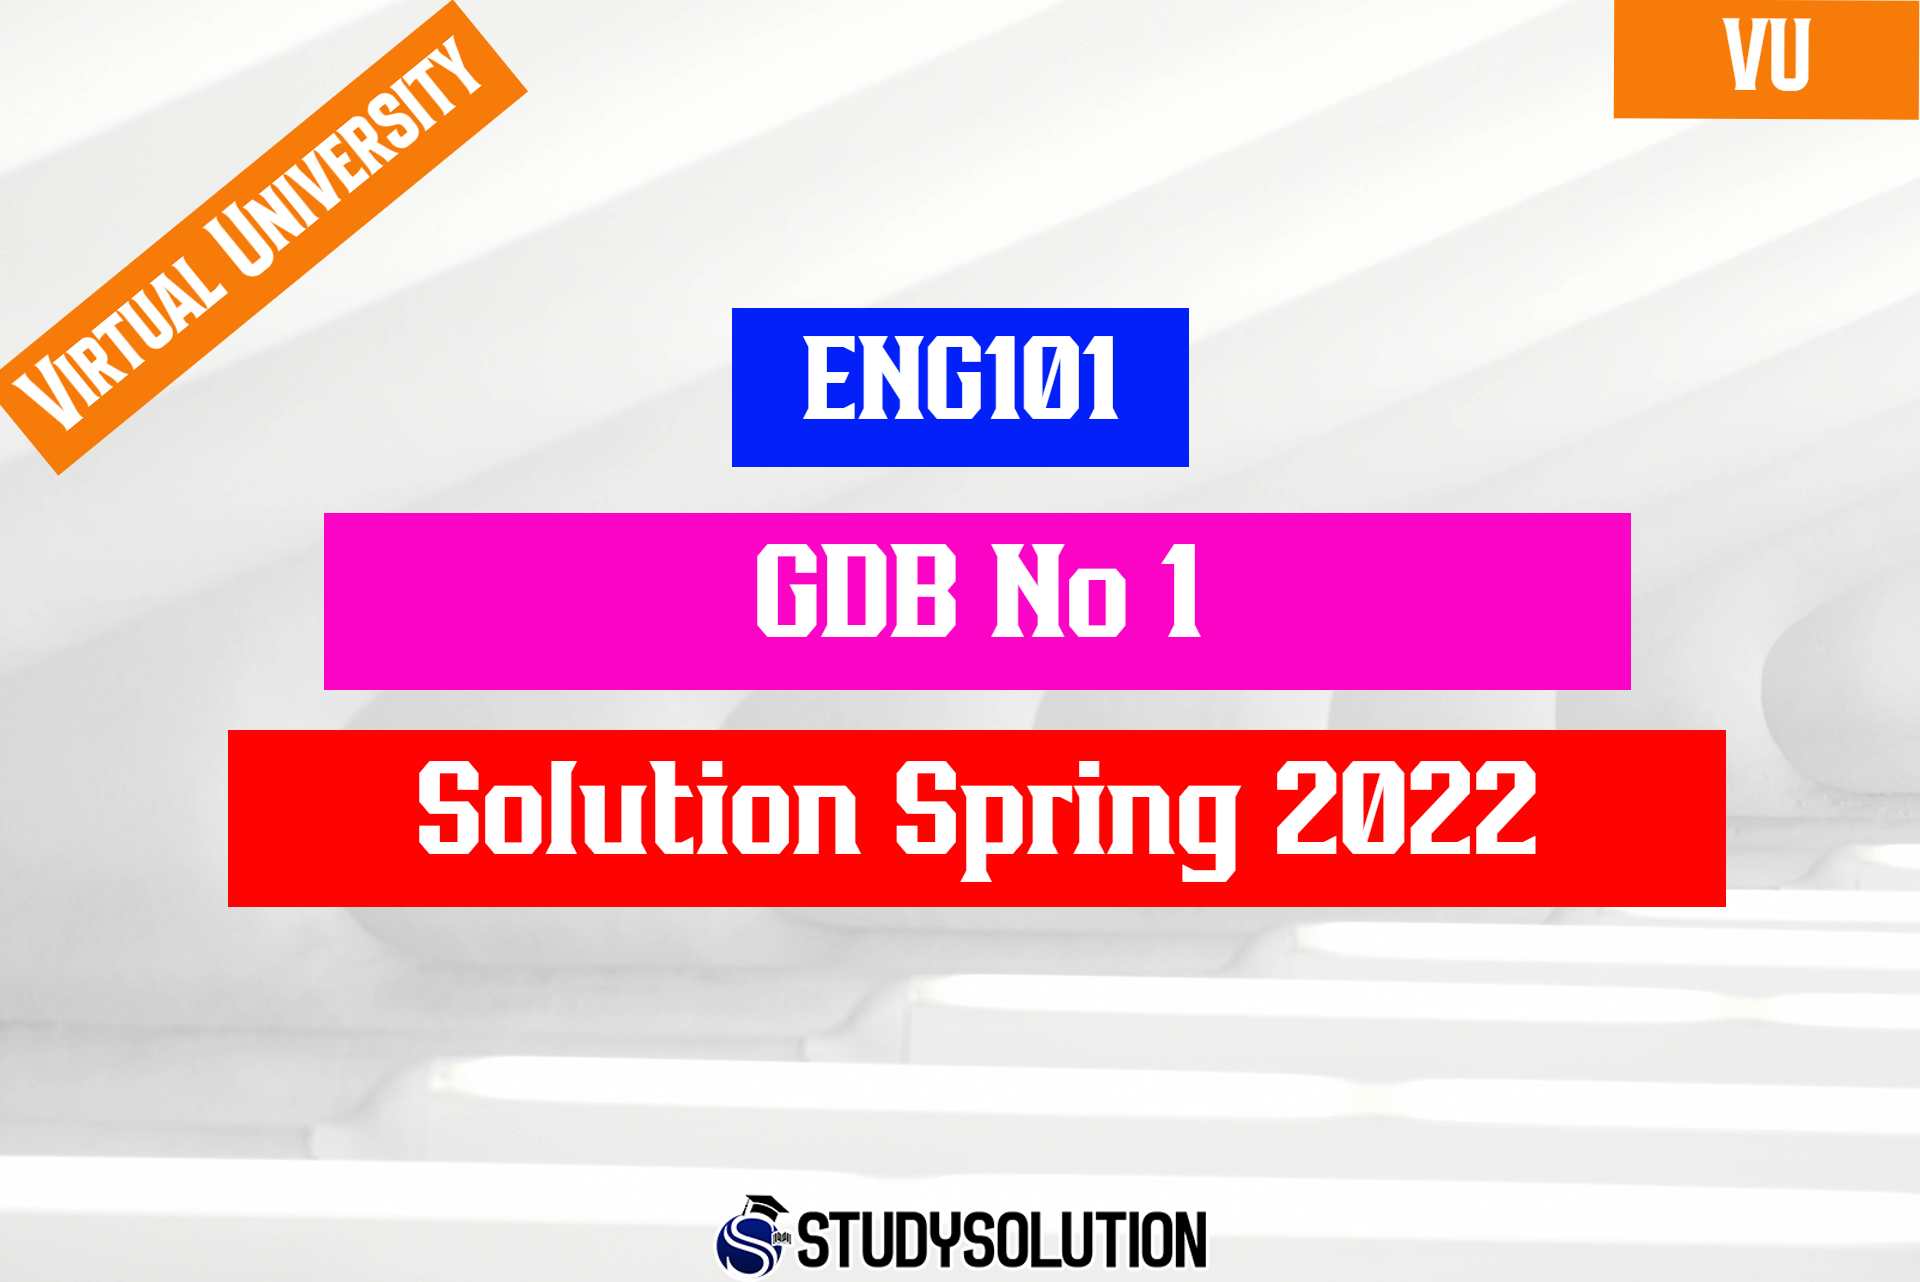 ENG101 GDB No 1 Solution Spring 2022